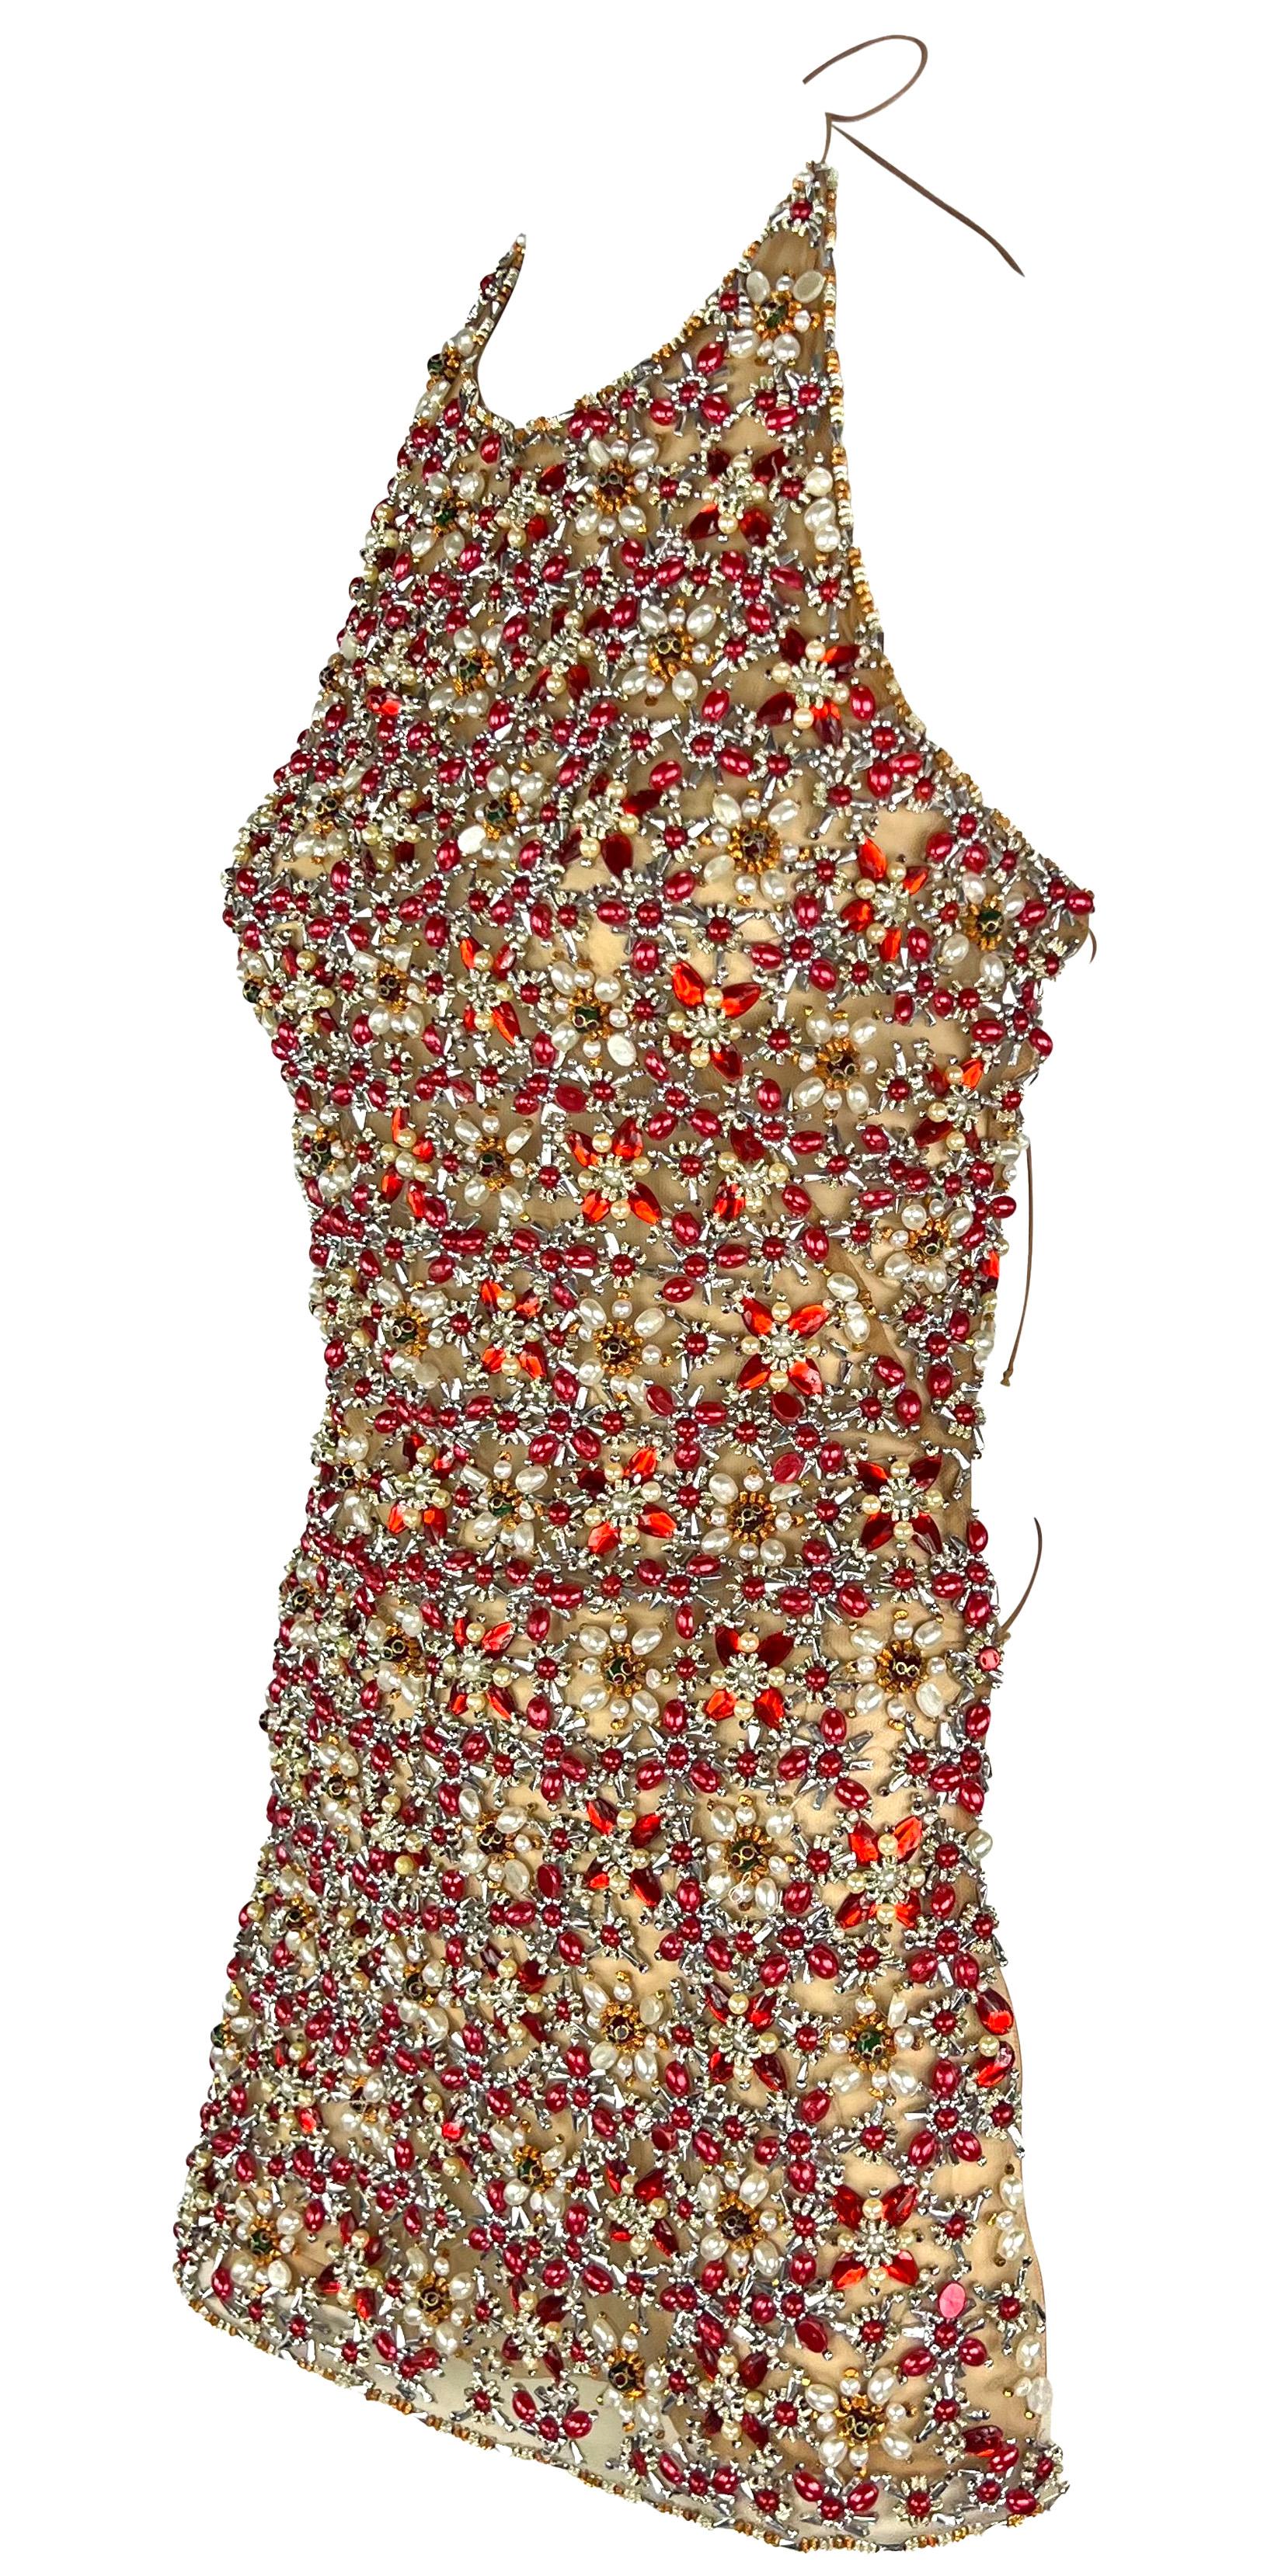 Women's S/S 2006 Gianfranco Ferré Sheer Faux Pearl Beaded Beige Backless Tie Top Blouse For Sale